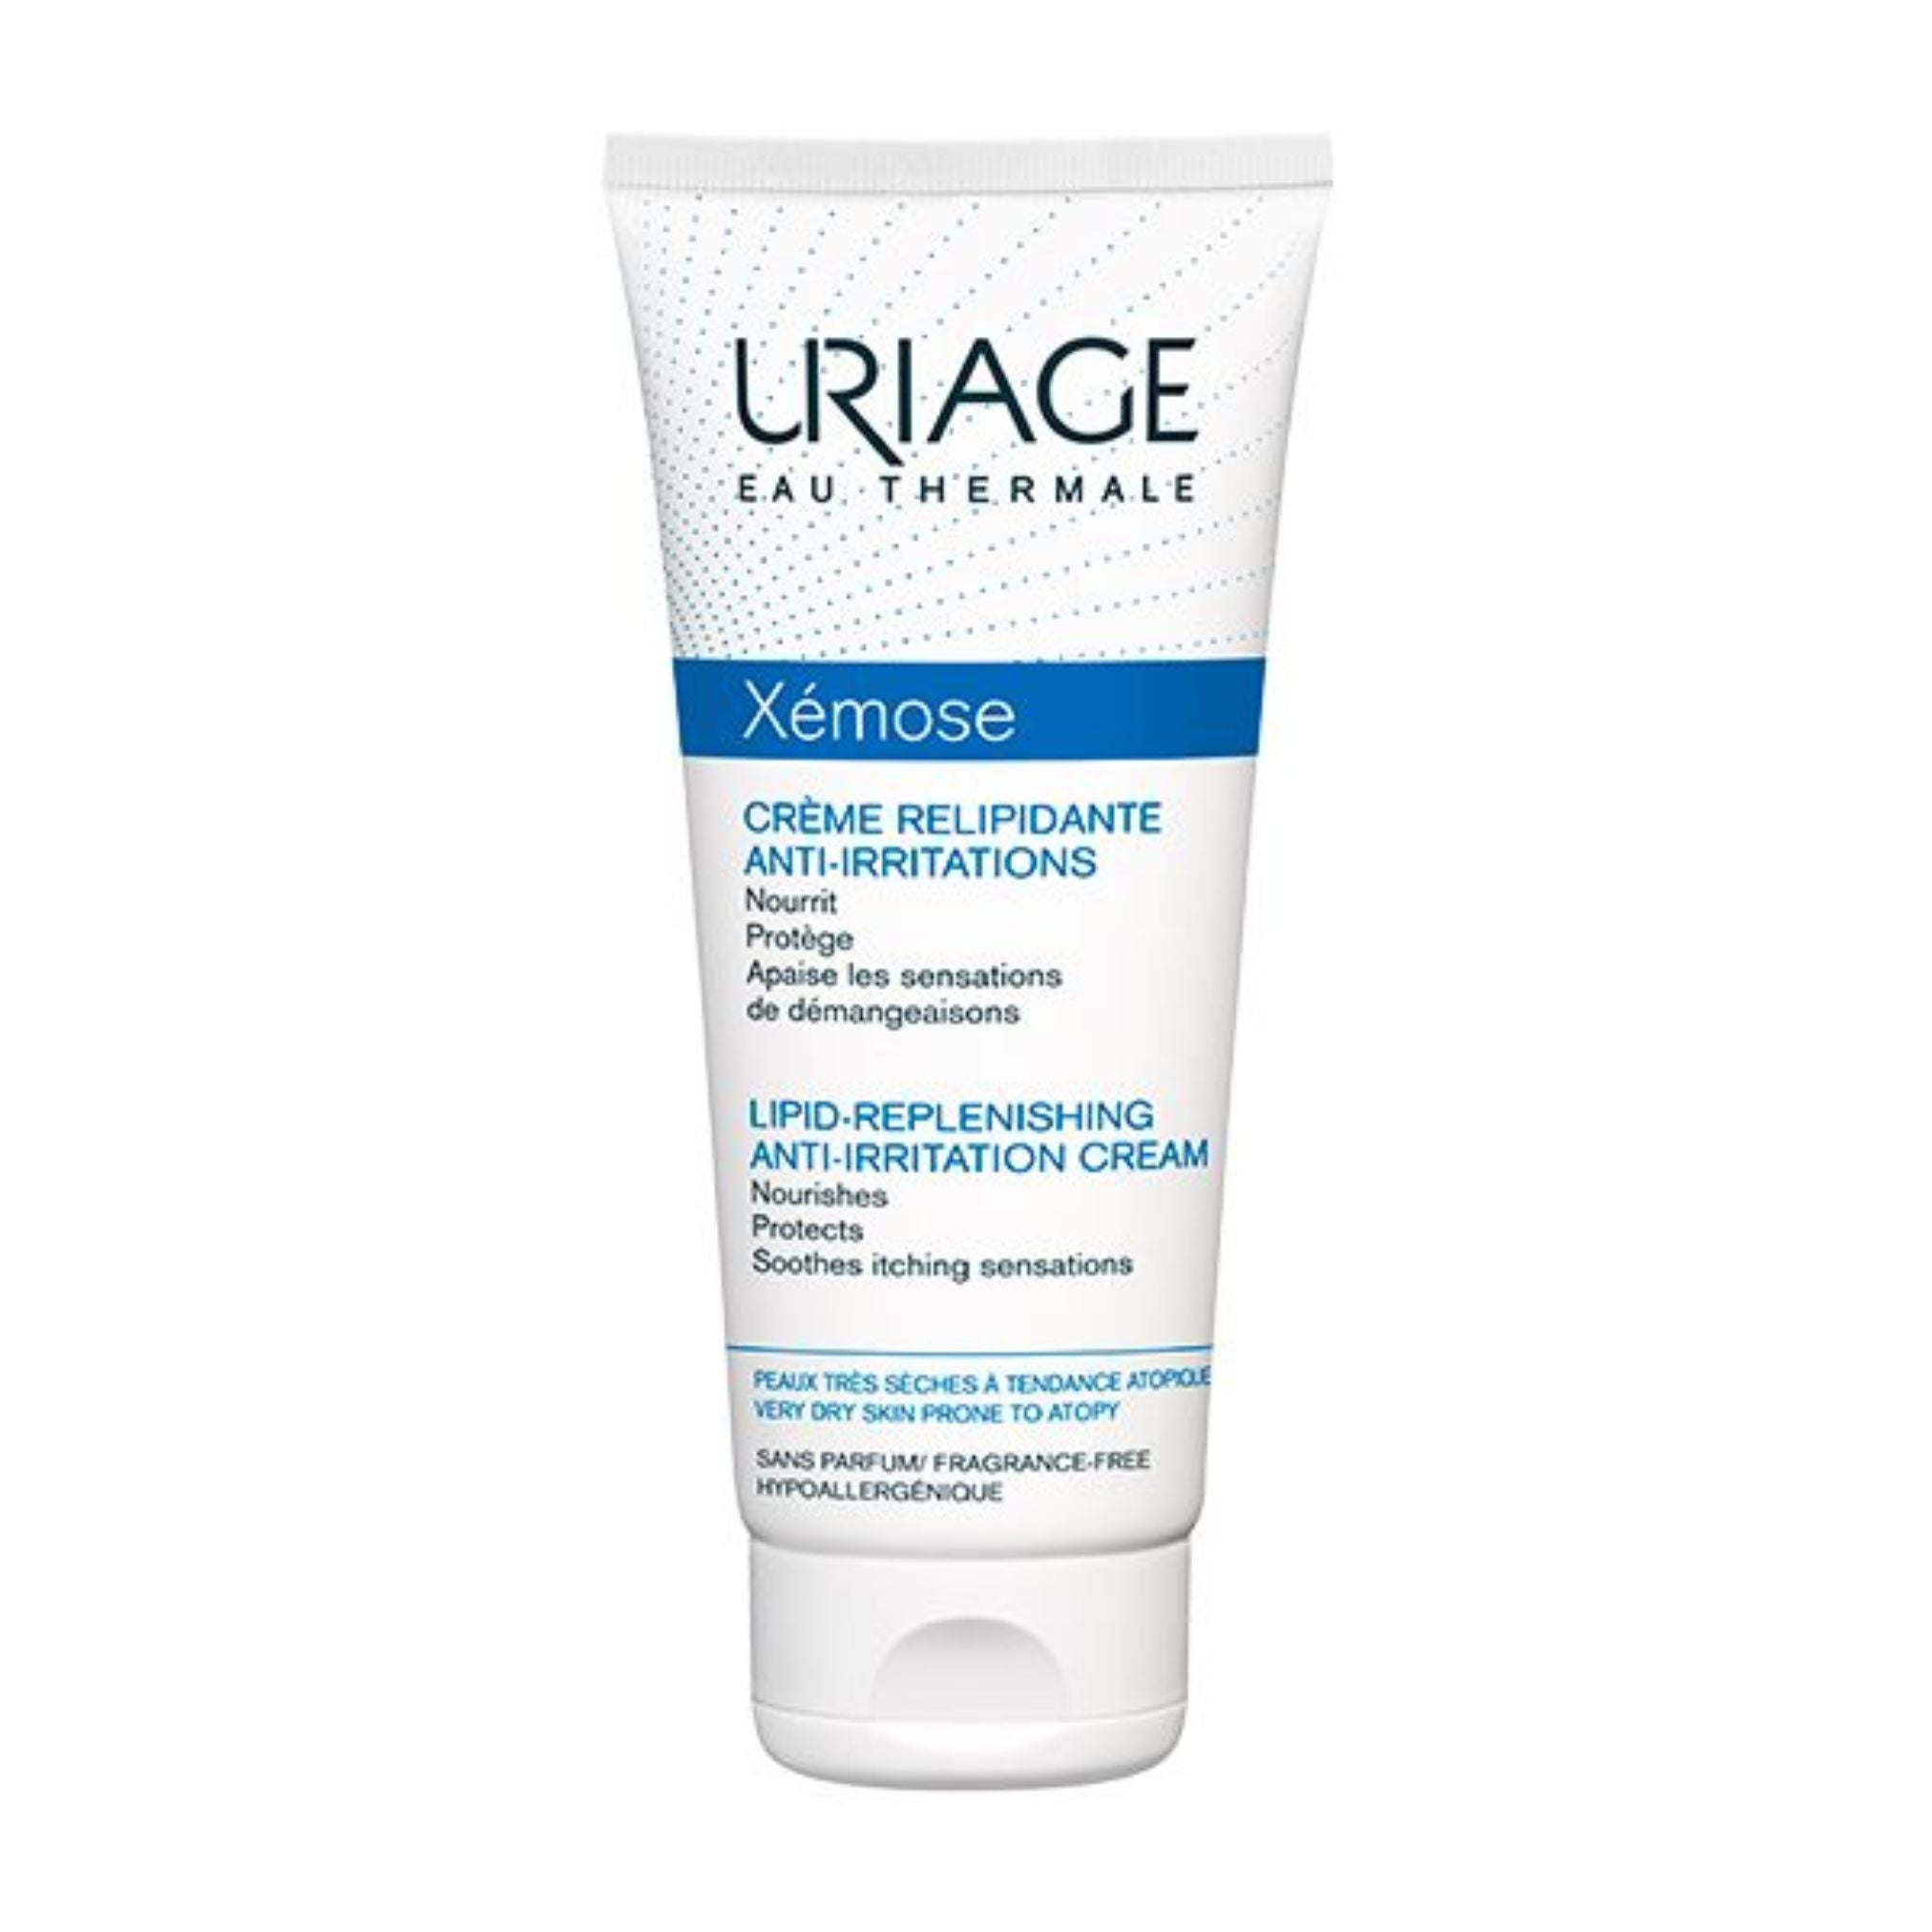 Uriage Eau Thermale Xémose Lipid-Repleneshing Anti-Irritation Cream 200ml